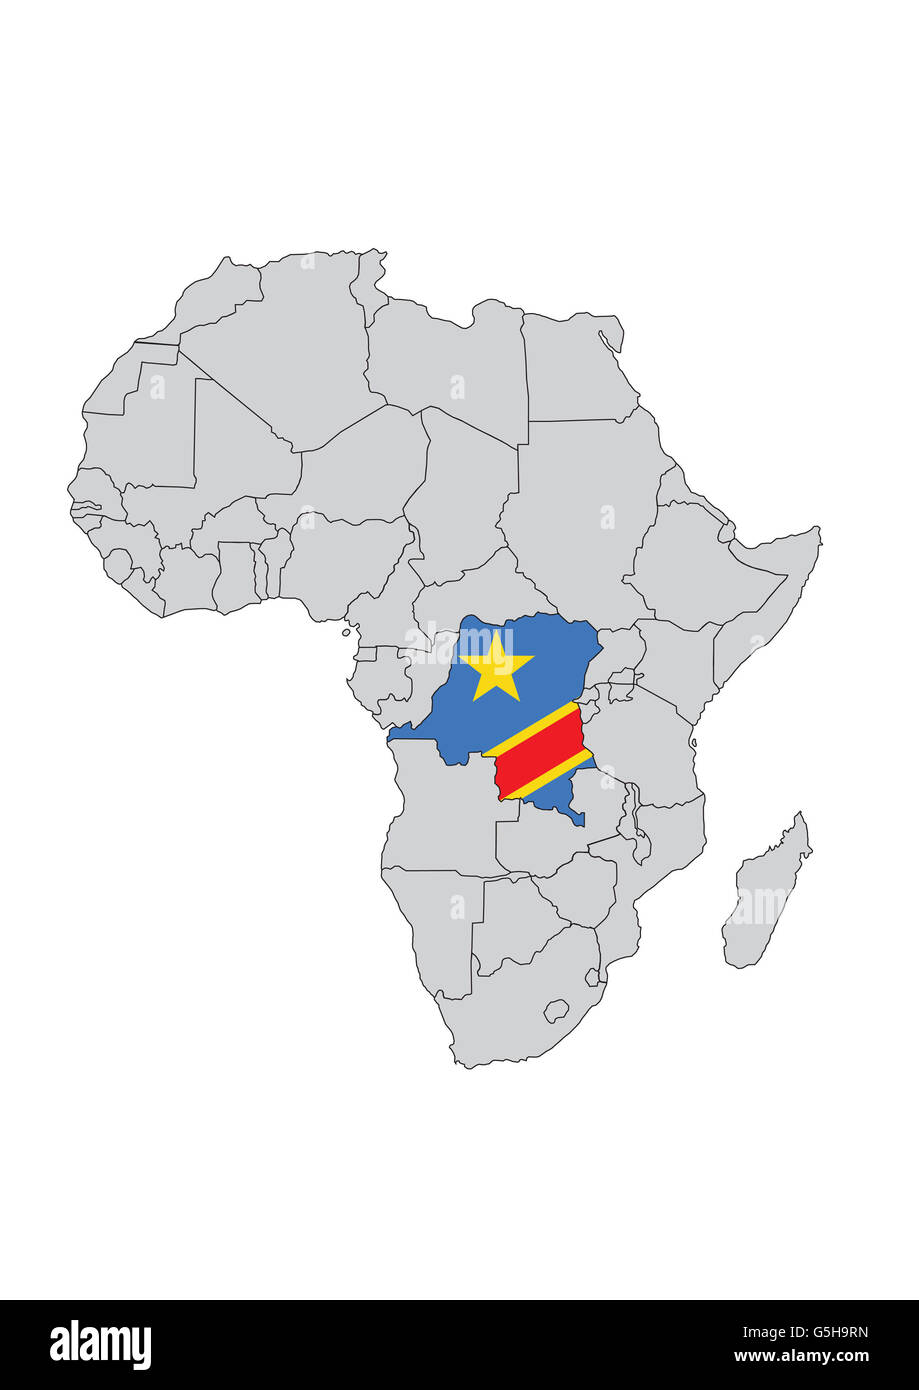 The Democratic Republic of the Congo, Africa. Stock Photo